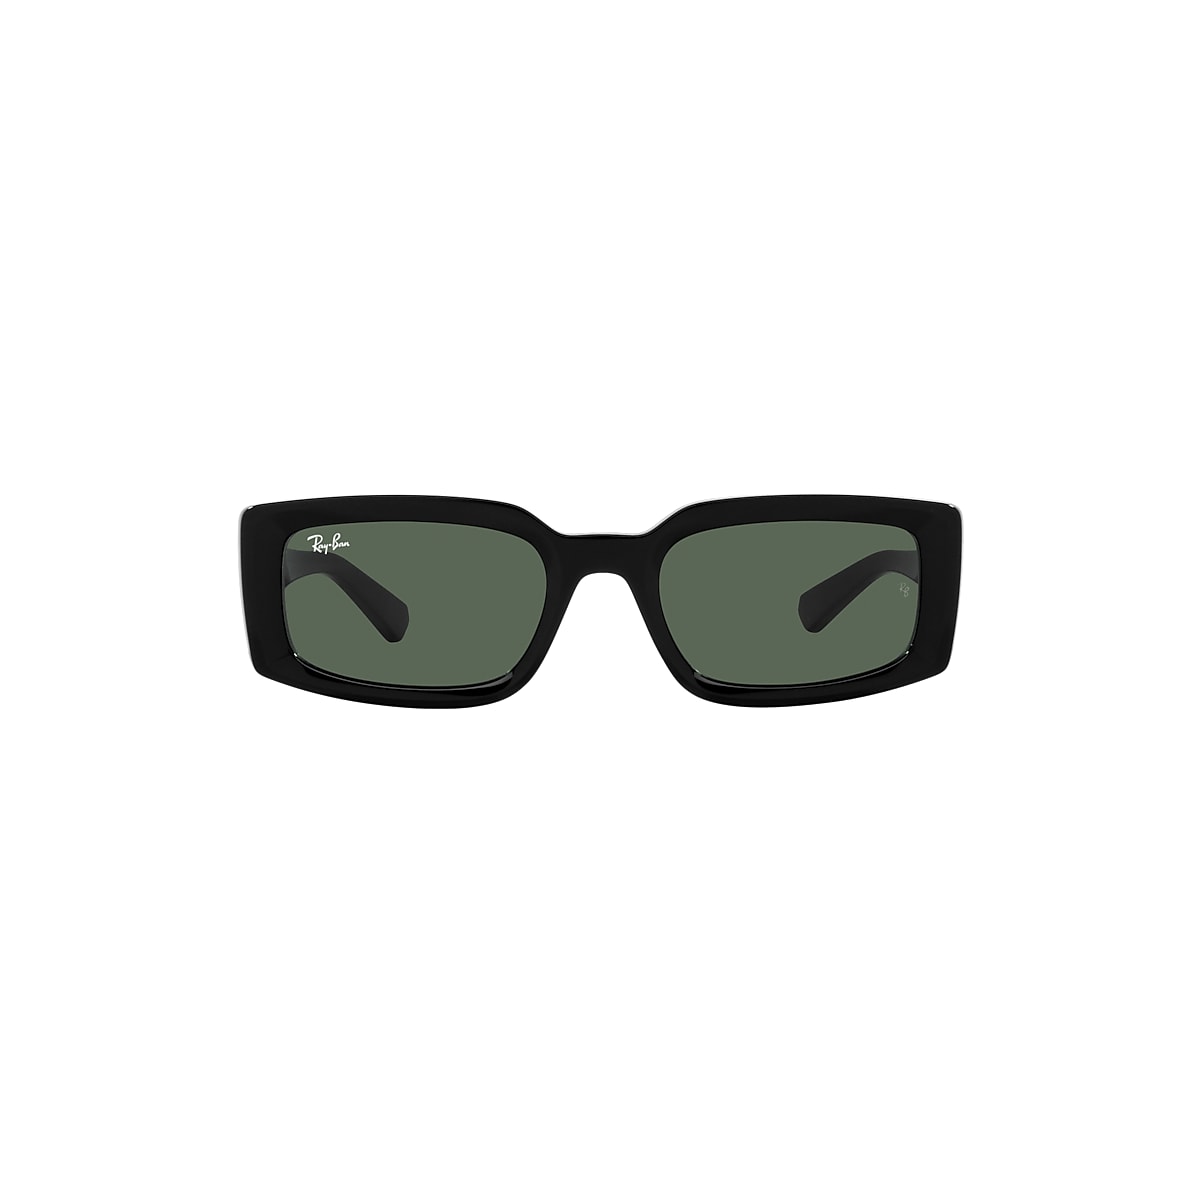 KILIANE BIO-BASED Sunglasses in Black and Green - RB4395F